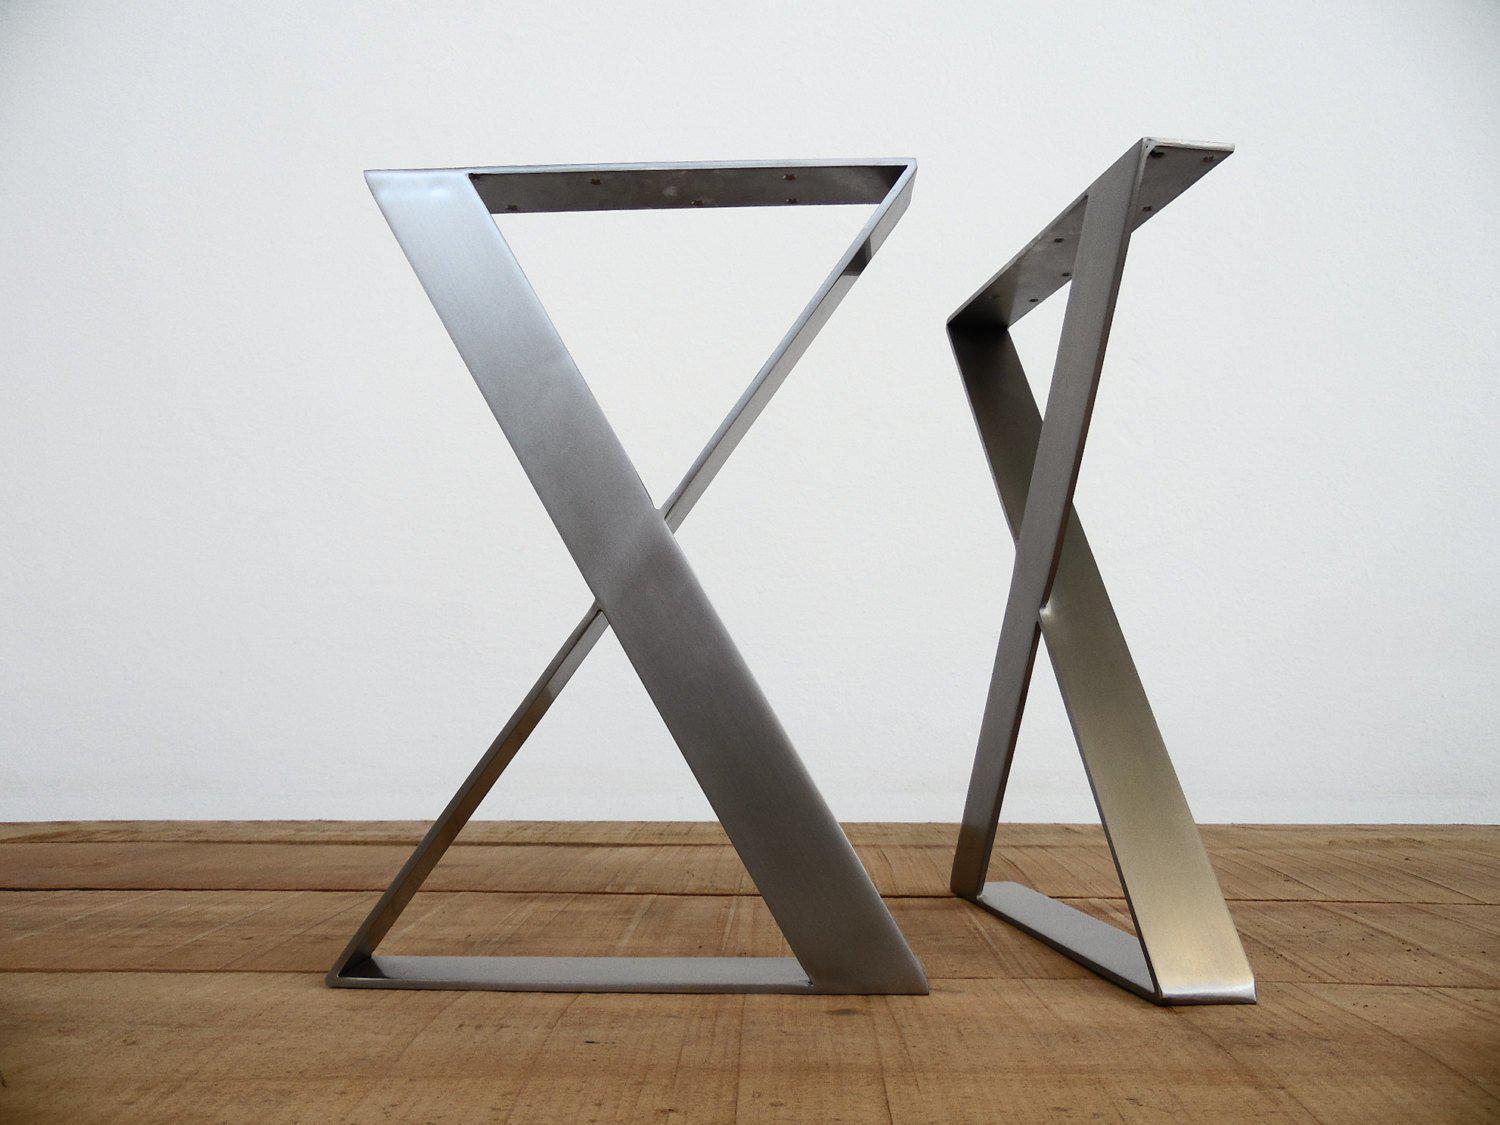 stainless steel table legs